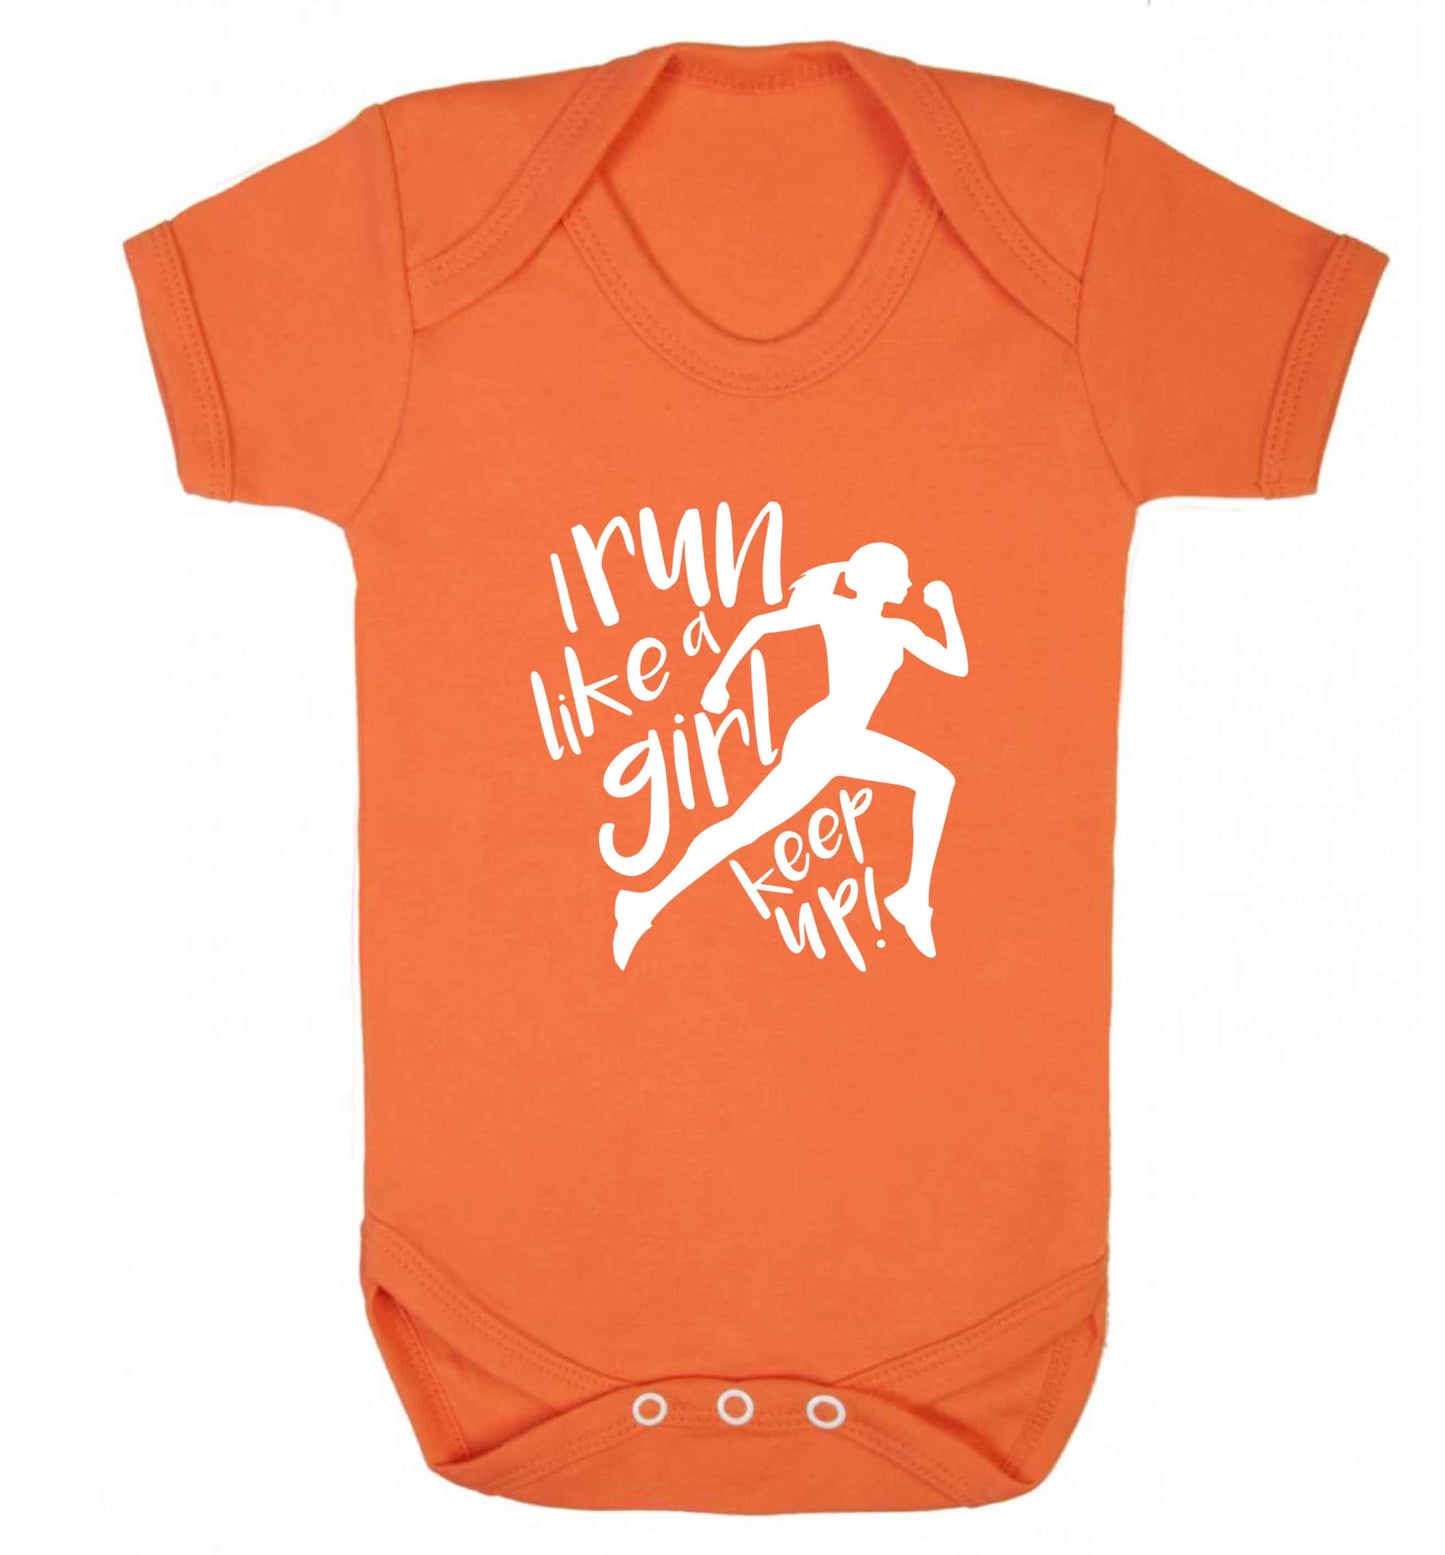 I run like a girl, keep up! baby vest orange 18-24 months